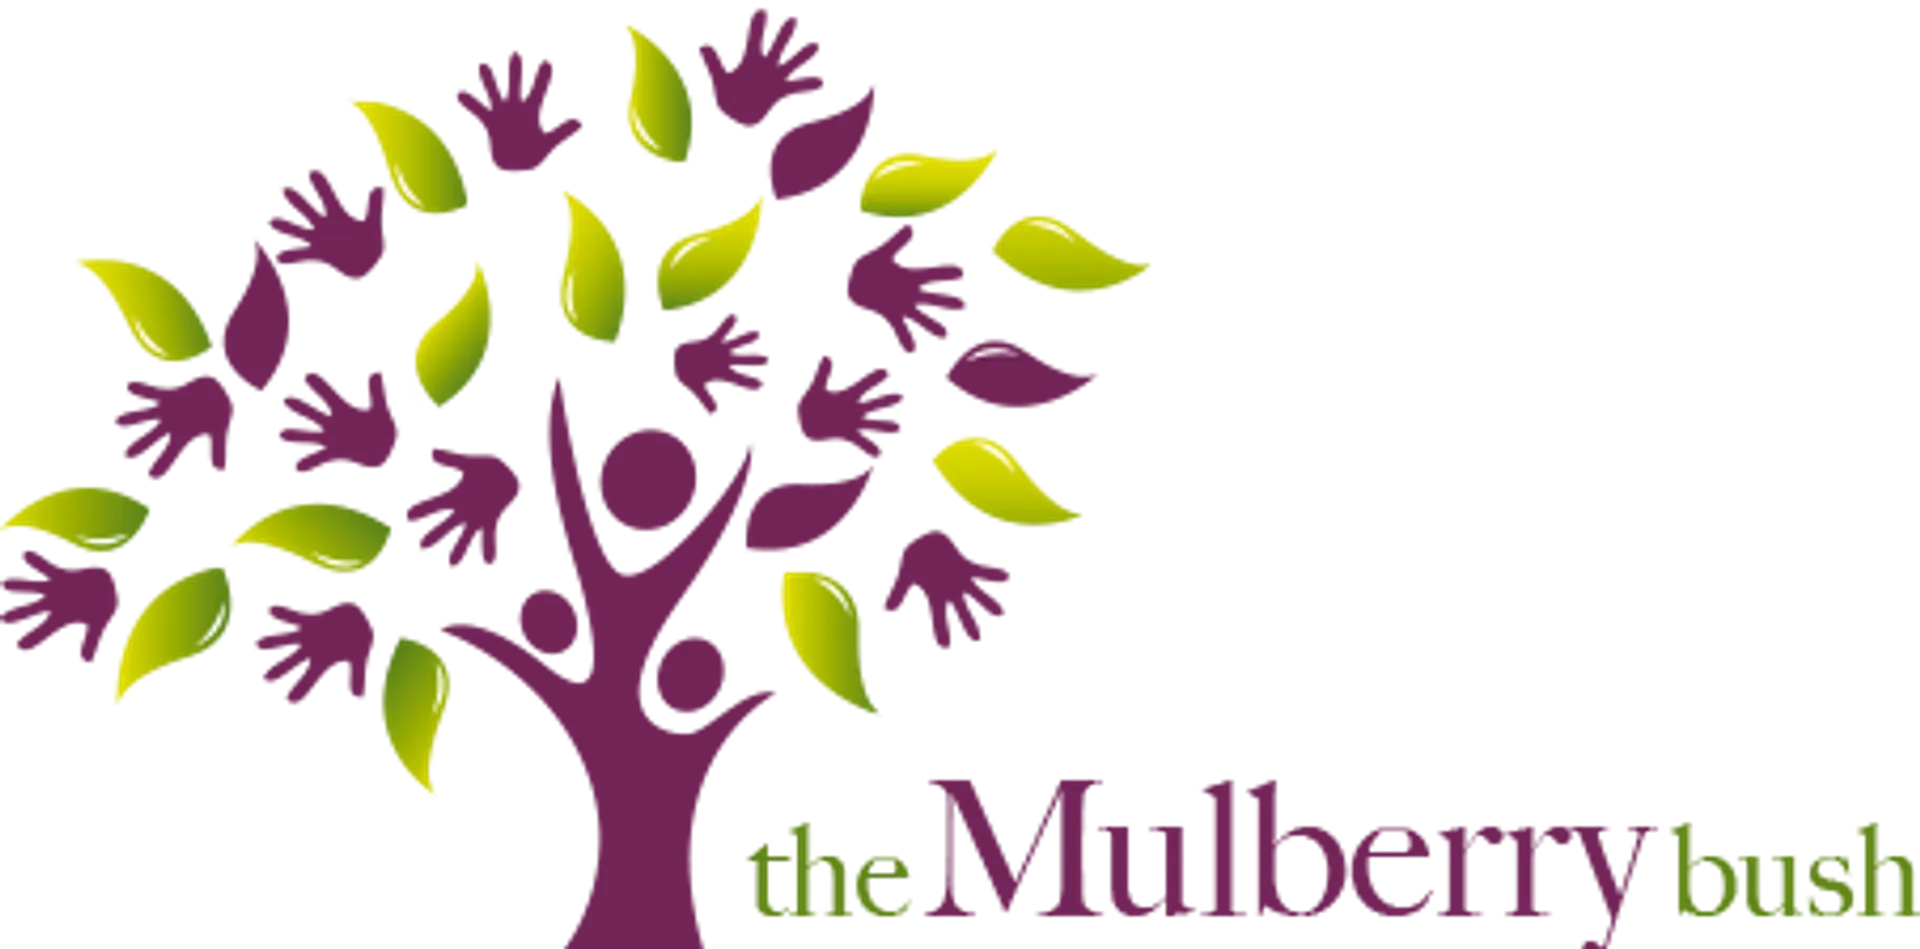 MULBERRY BUSH logo. Current catalogue